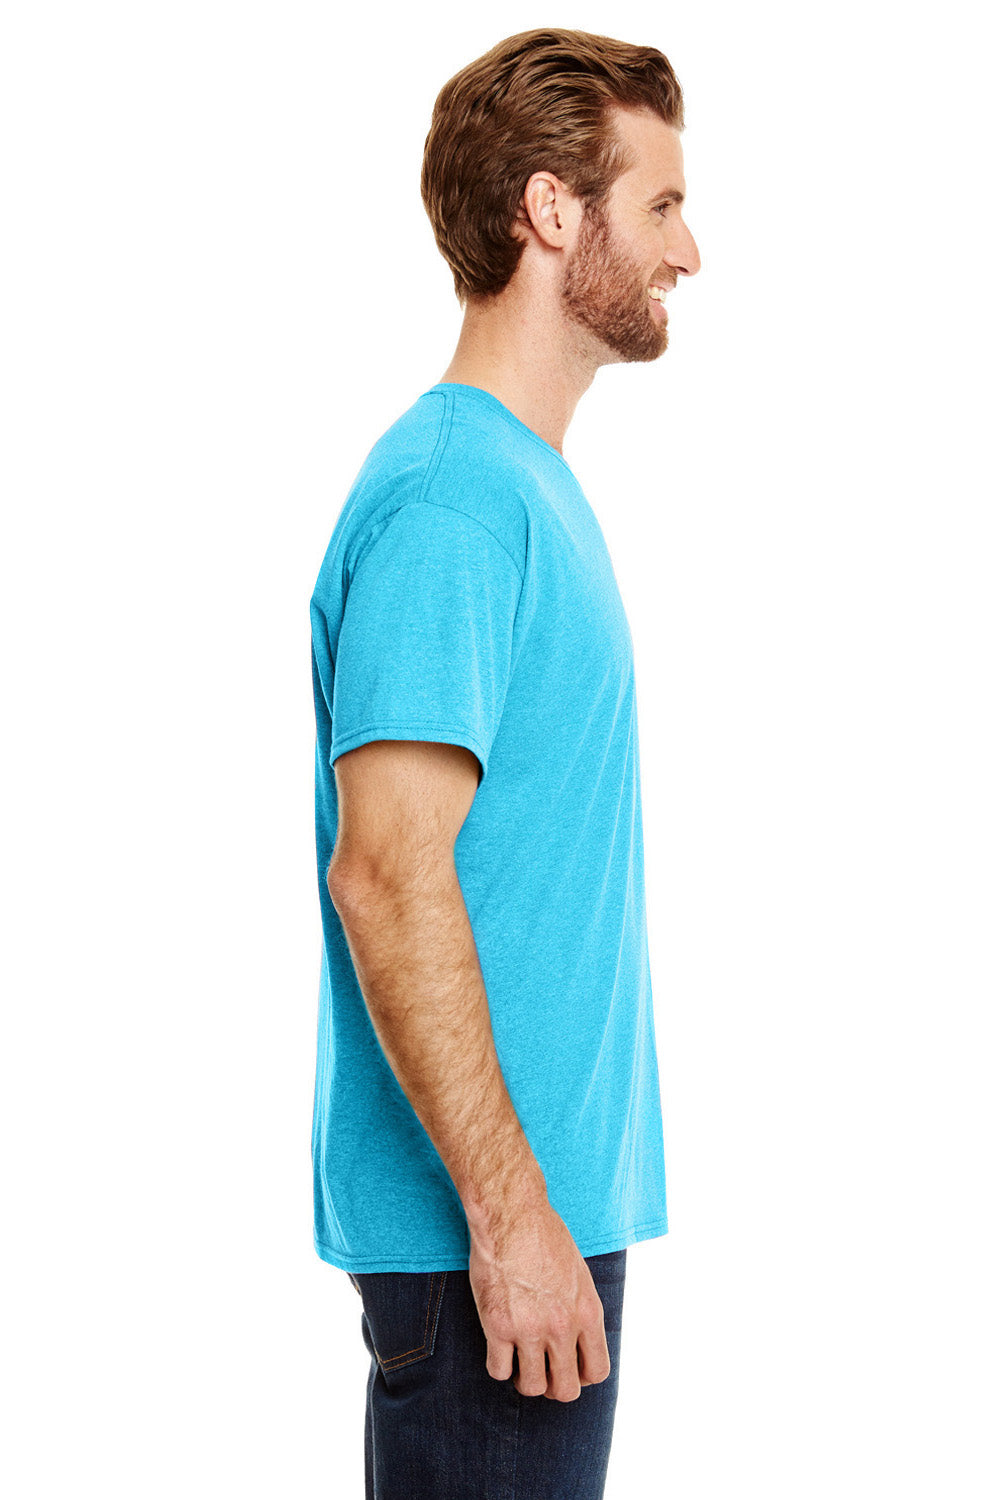 Hanes 42TB Mens X-Temp FreshIQ Moisture Wicking Short Sleeve Crewneck T-Shirt Turquoise Blue Side